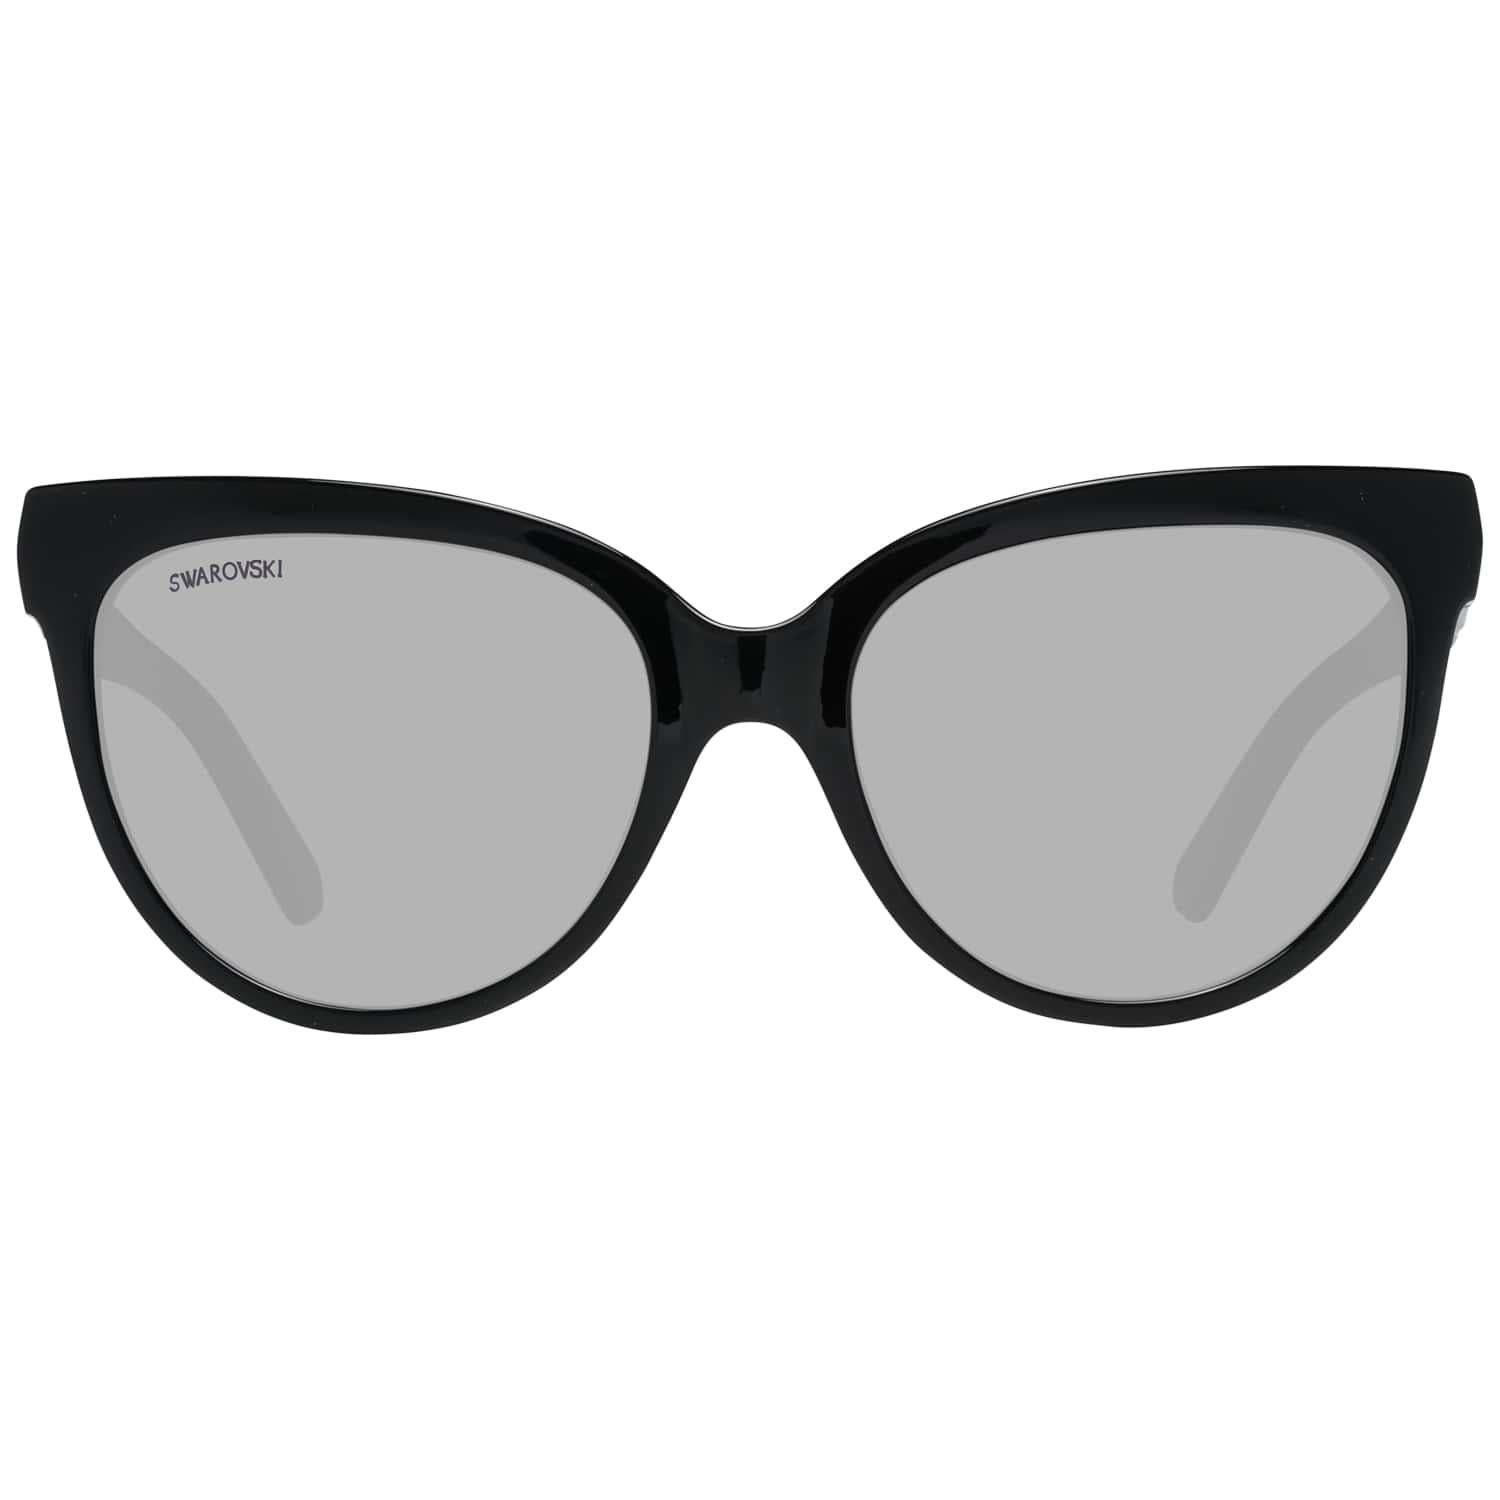 Swarovski Mint Women Black Sunglasses SK0187 5601B 56-18-135 mm